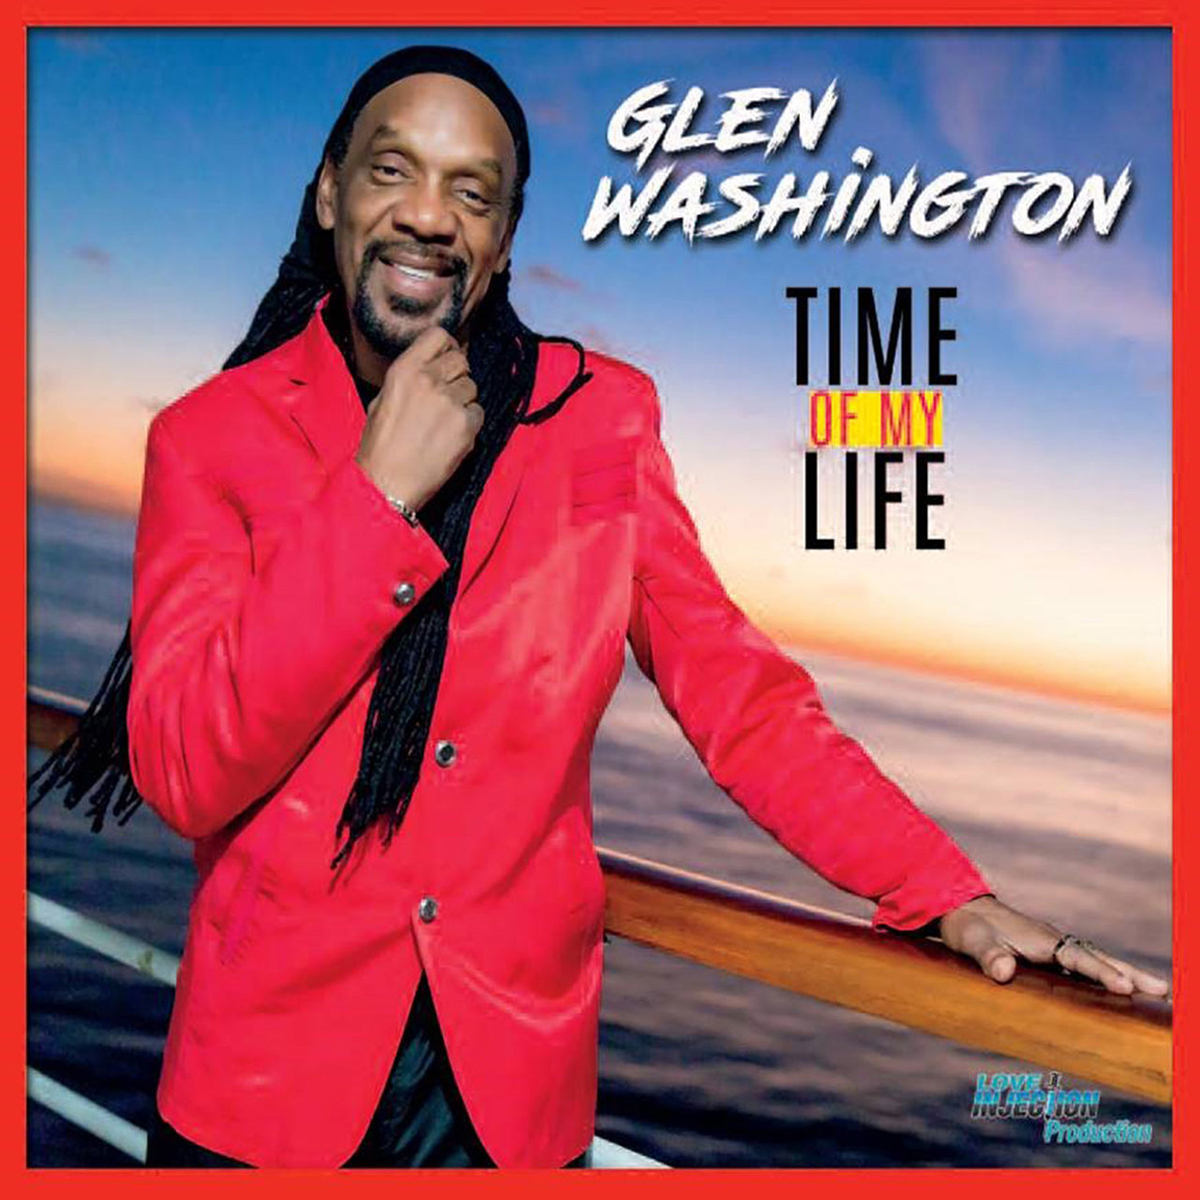 Glen Washington – Still Having The Time Of His Life